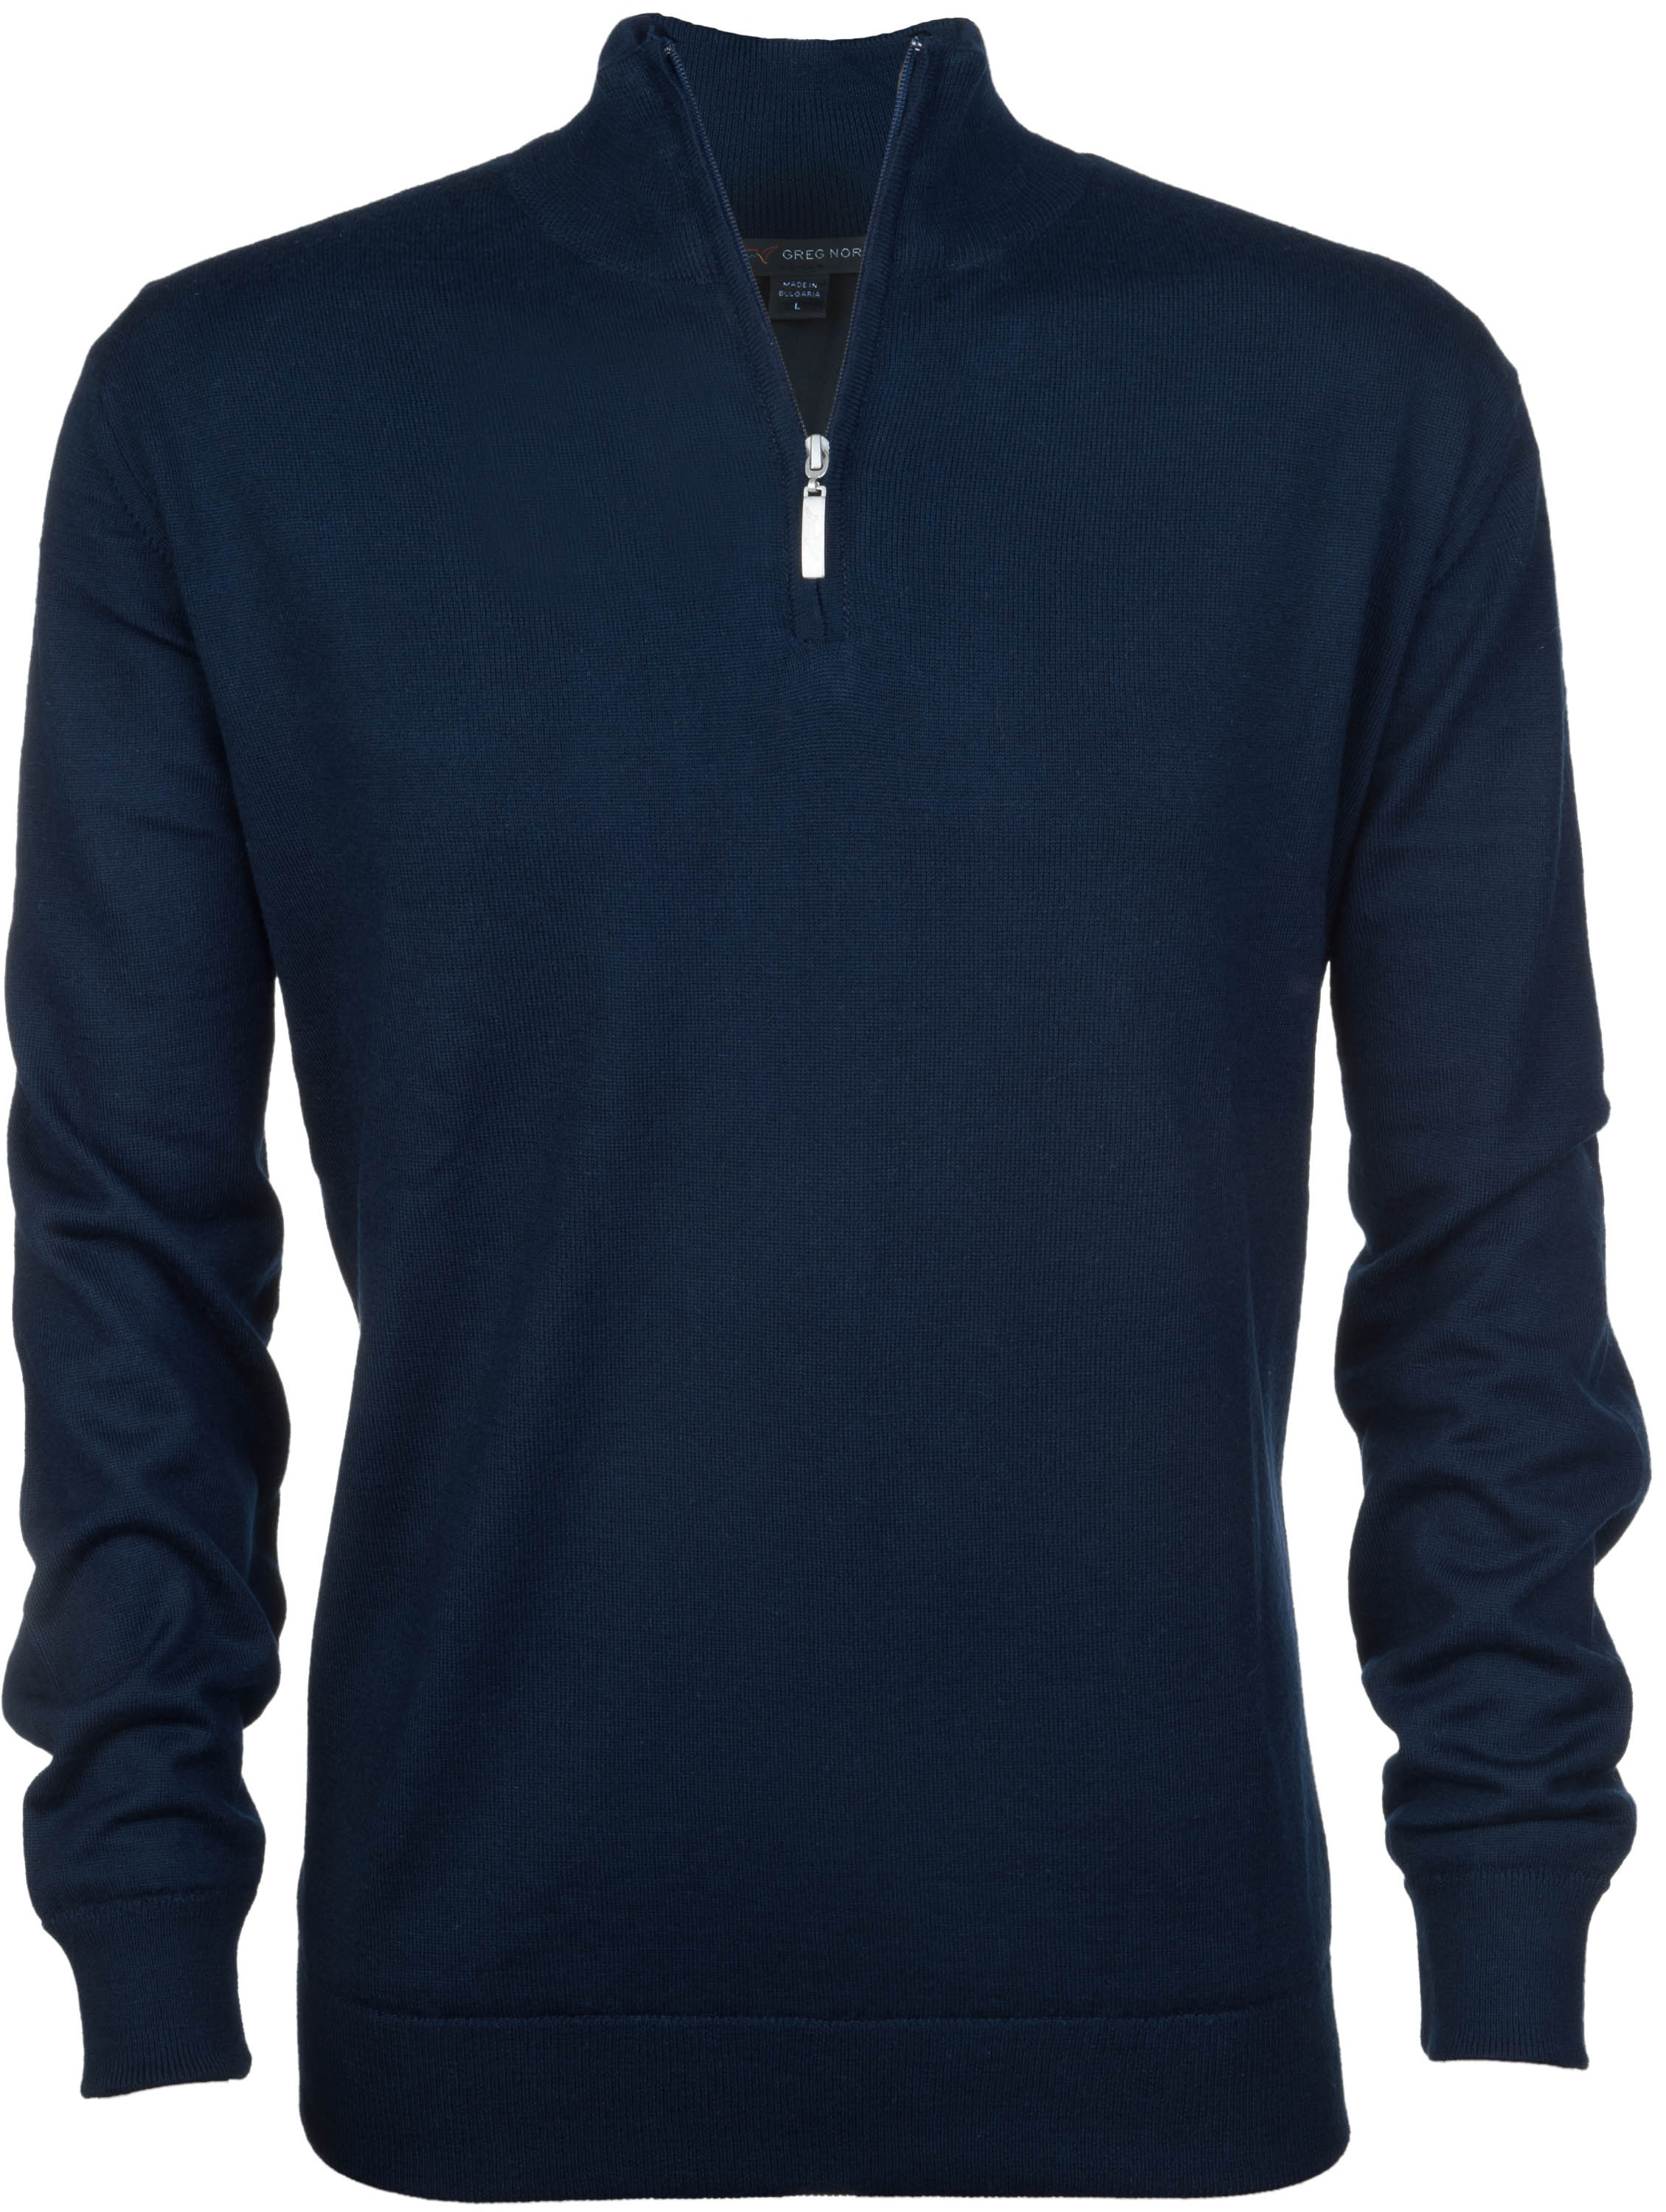 Greg Norman Windbreaker Lined 1/4 Zip Sweater, navy